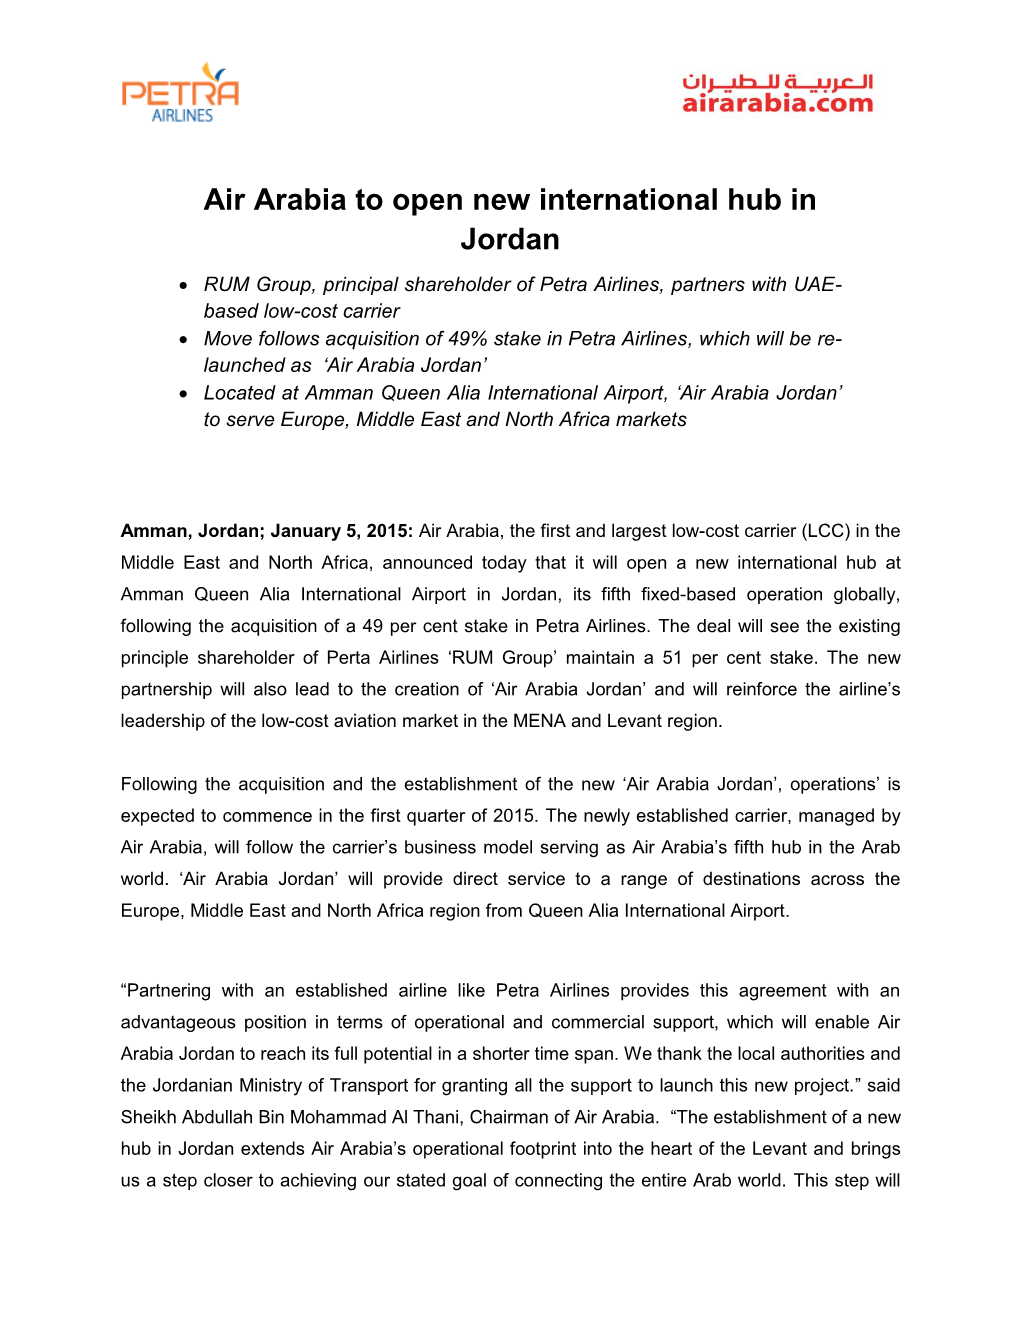 Air Arabia to Open New International Hub in Jordan